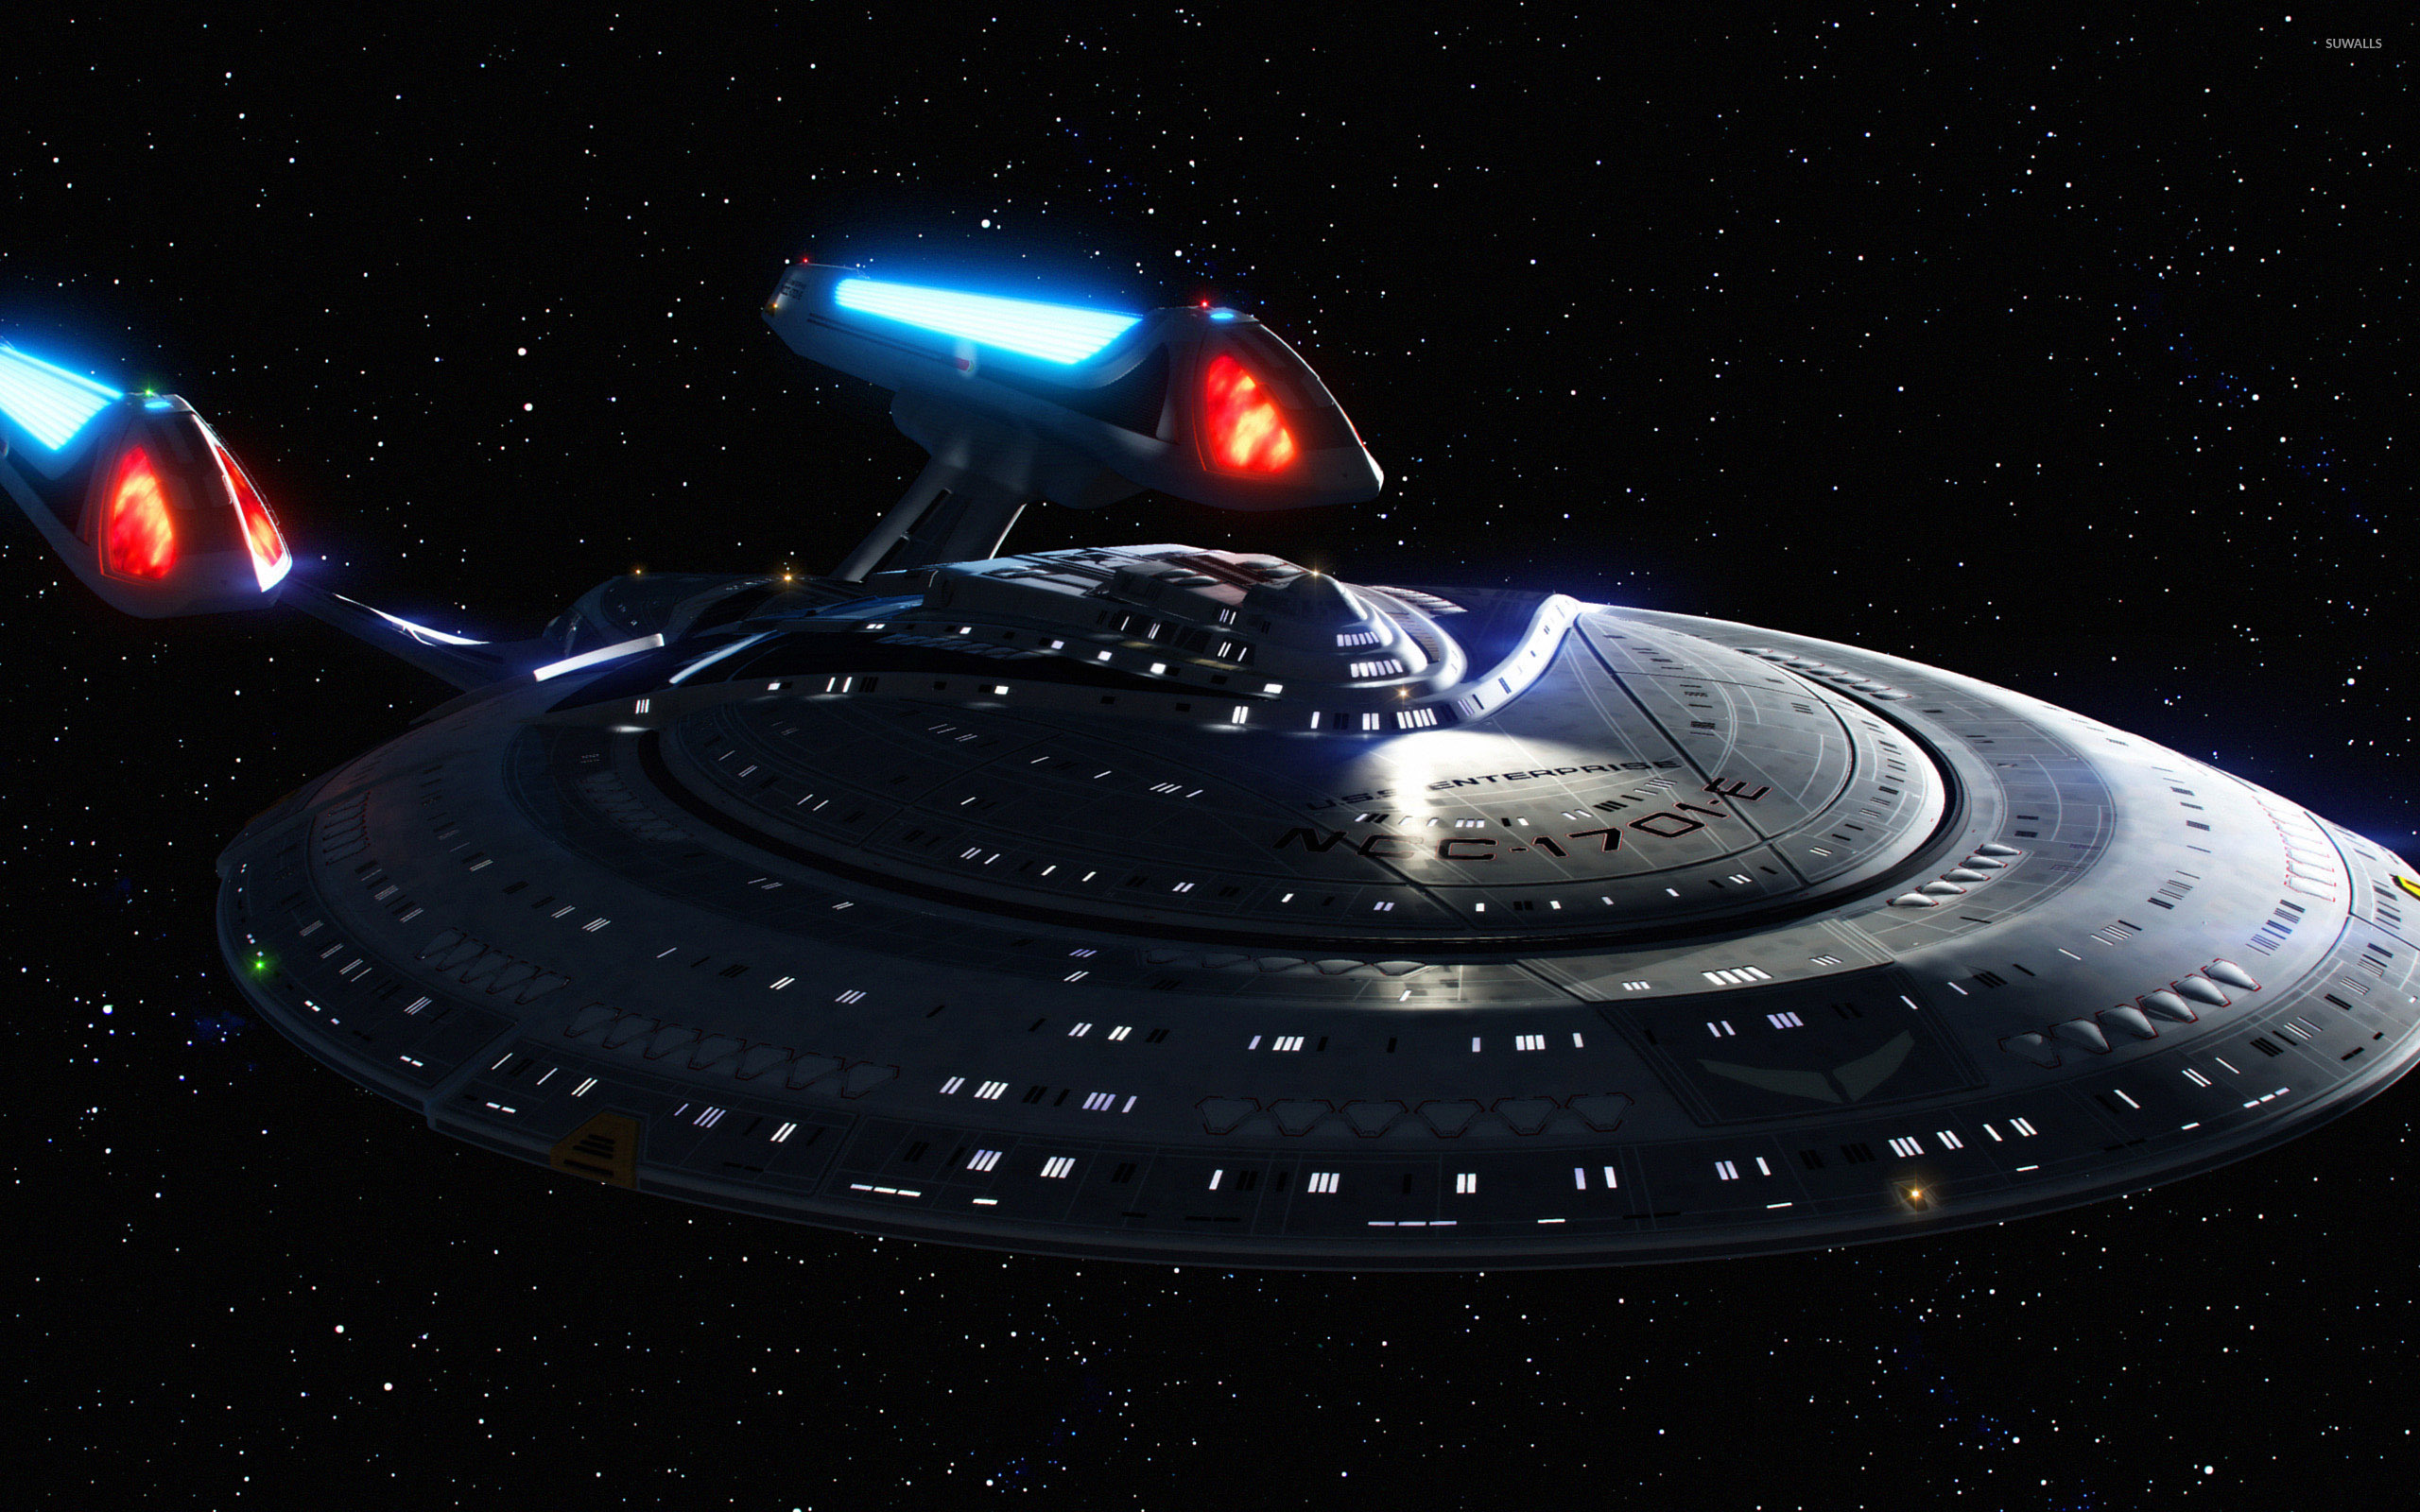 Enterprise (TV Series): The sixth series in the Star Trek franchise, A prequel to Star Trek: The Original Series. 2560x1600 HD Wallpaper.